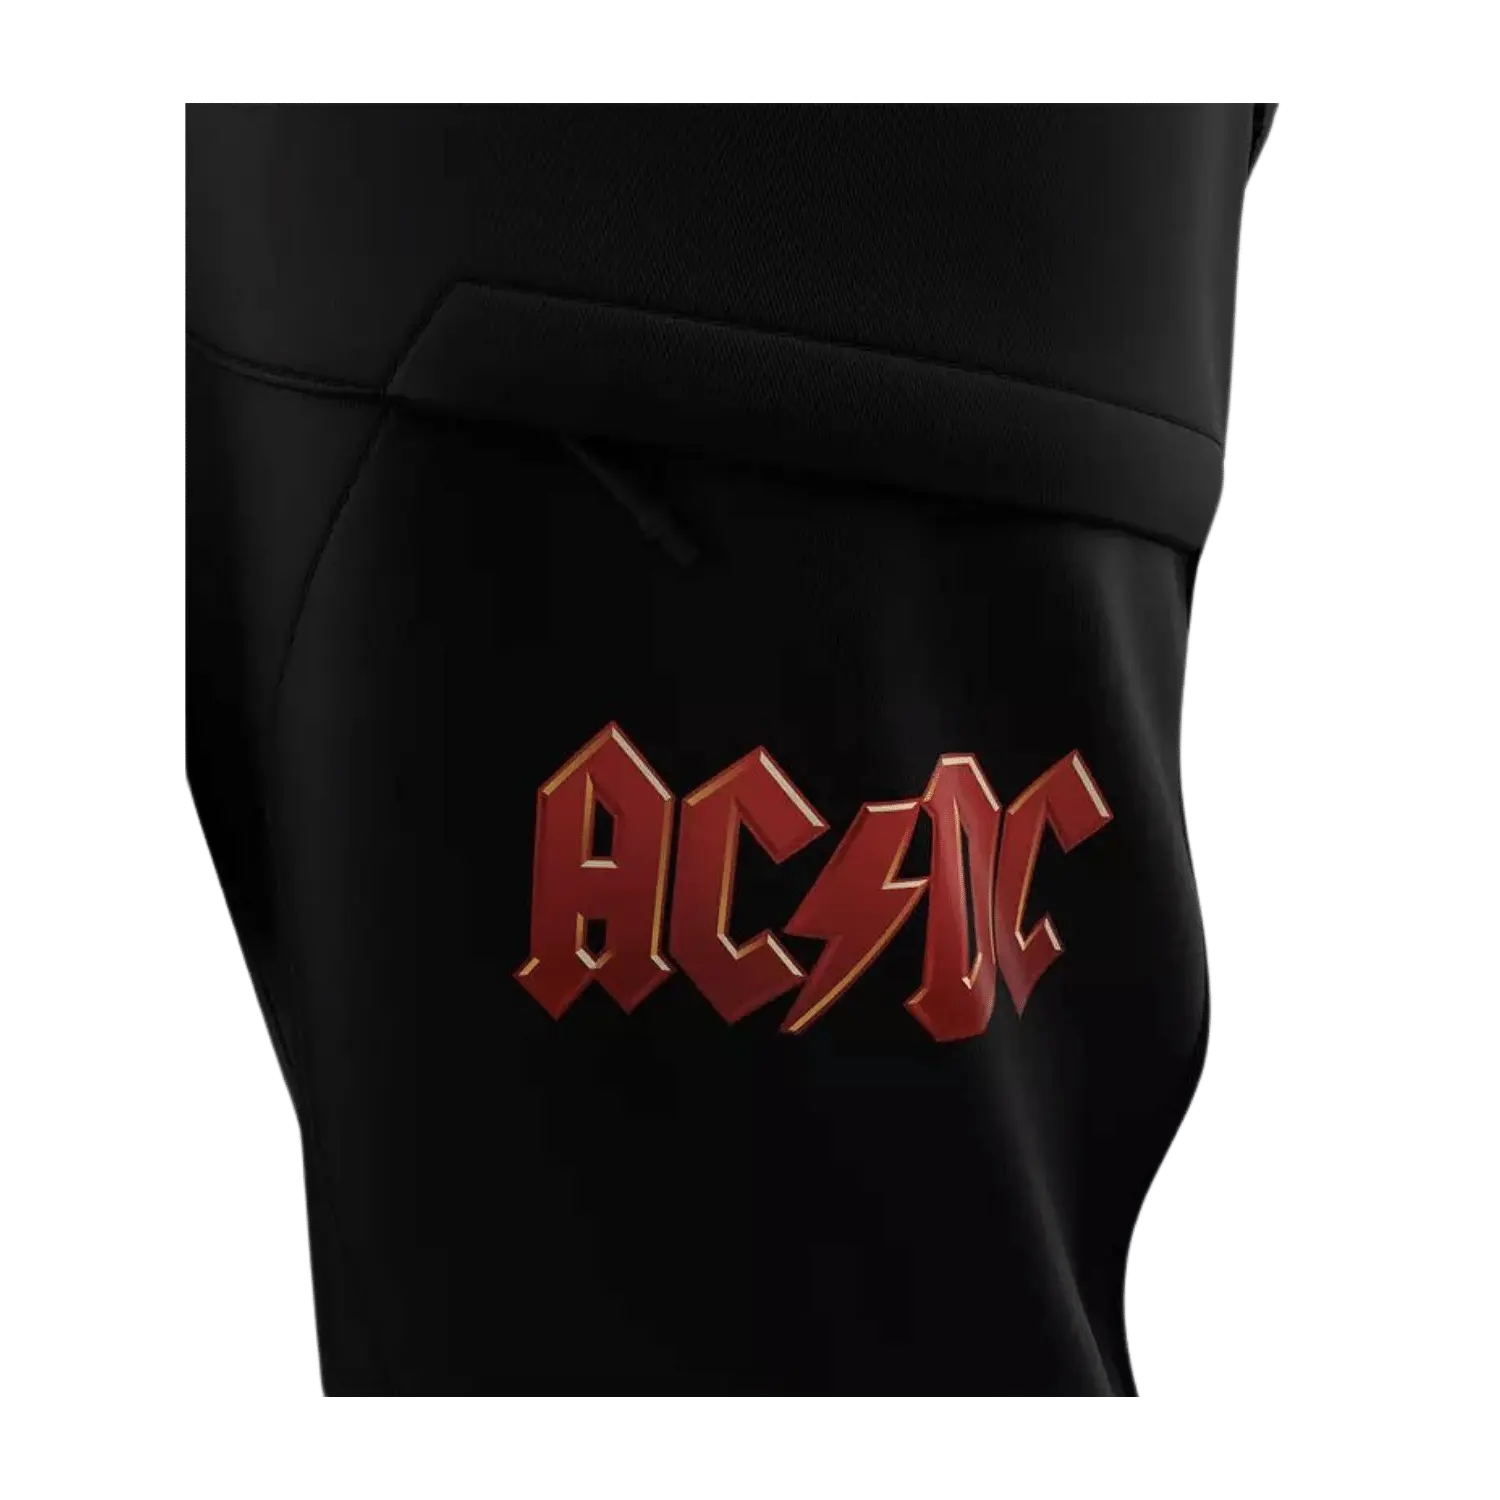 AC/DC short limited edition - zwart - maat 50